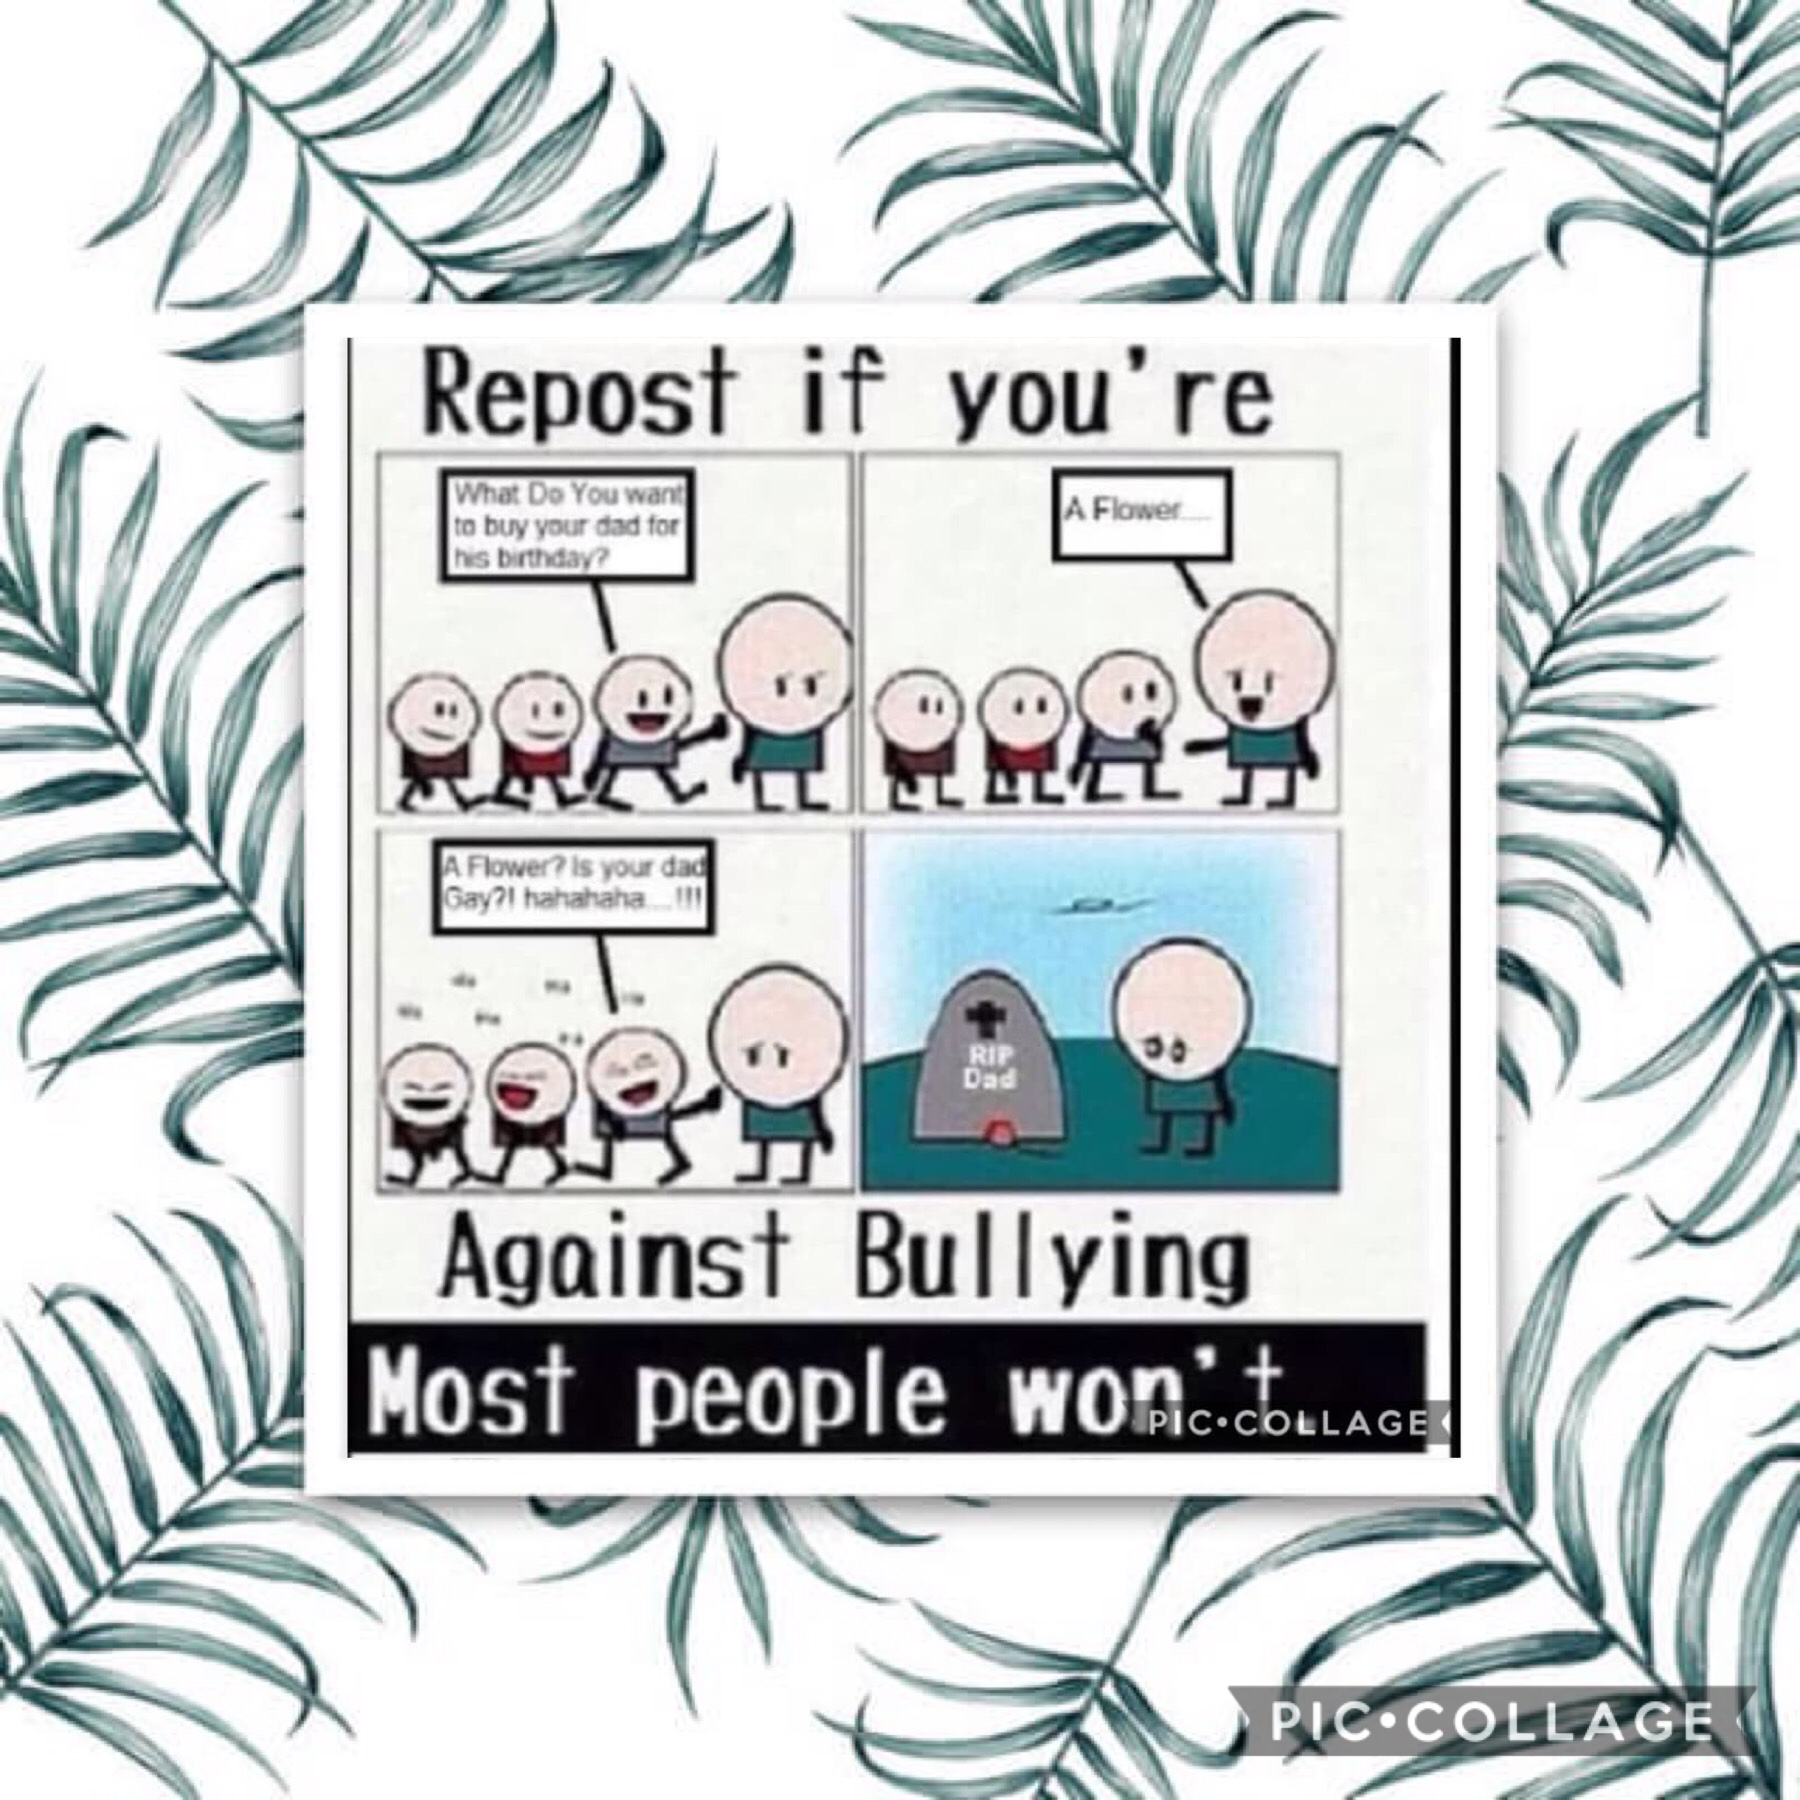 🌷Tap 🌷
Help stop bullying. Please repost. 